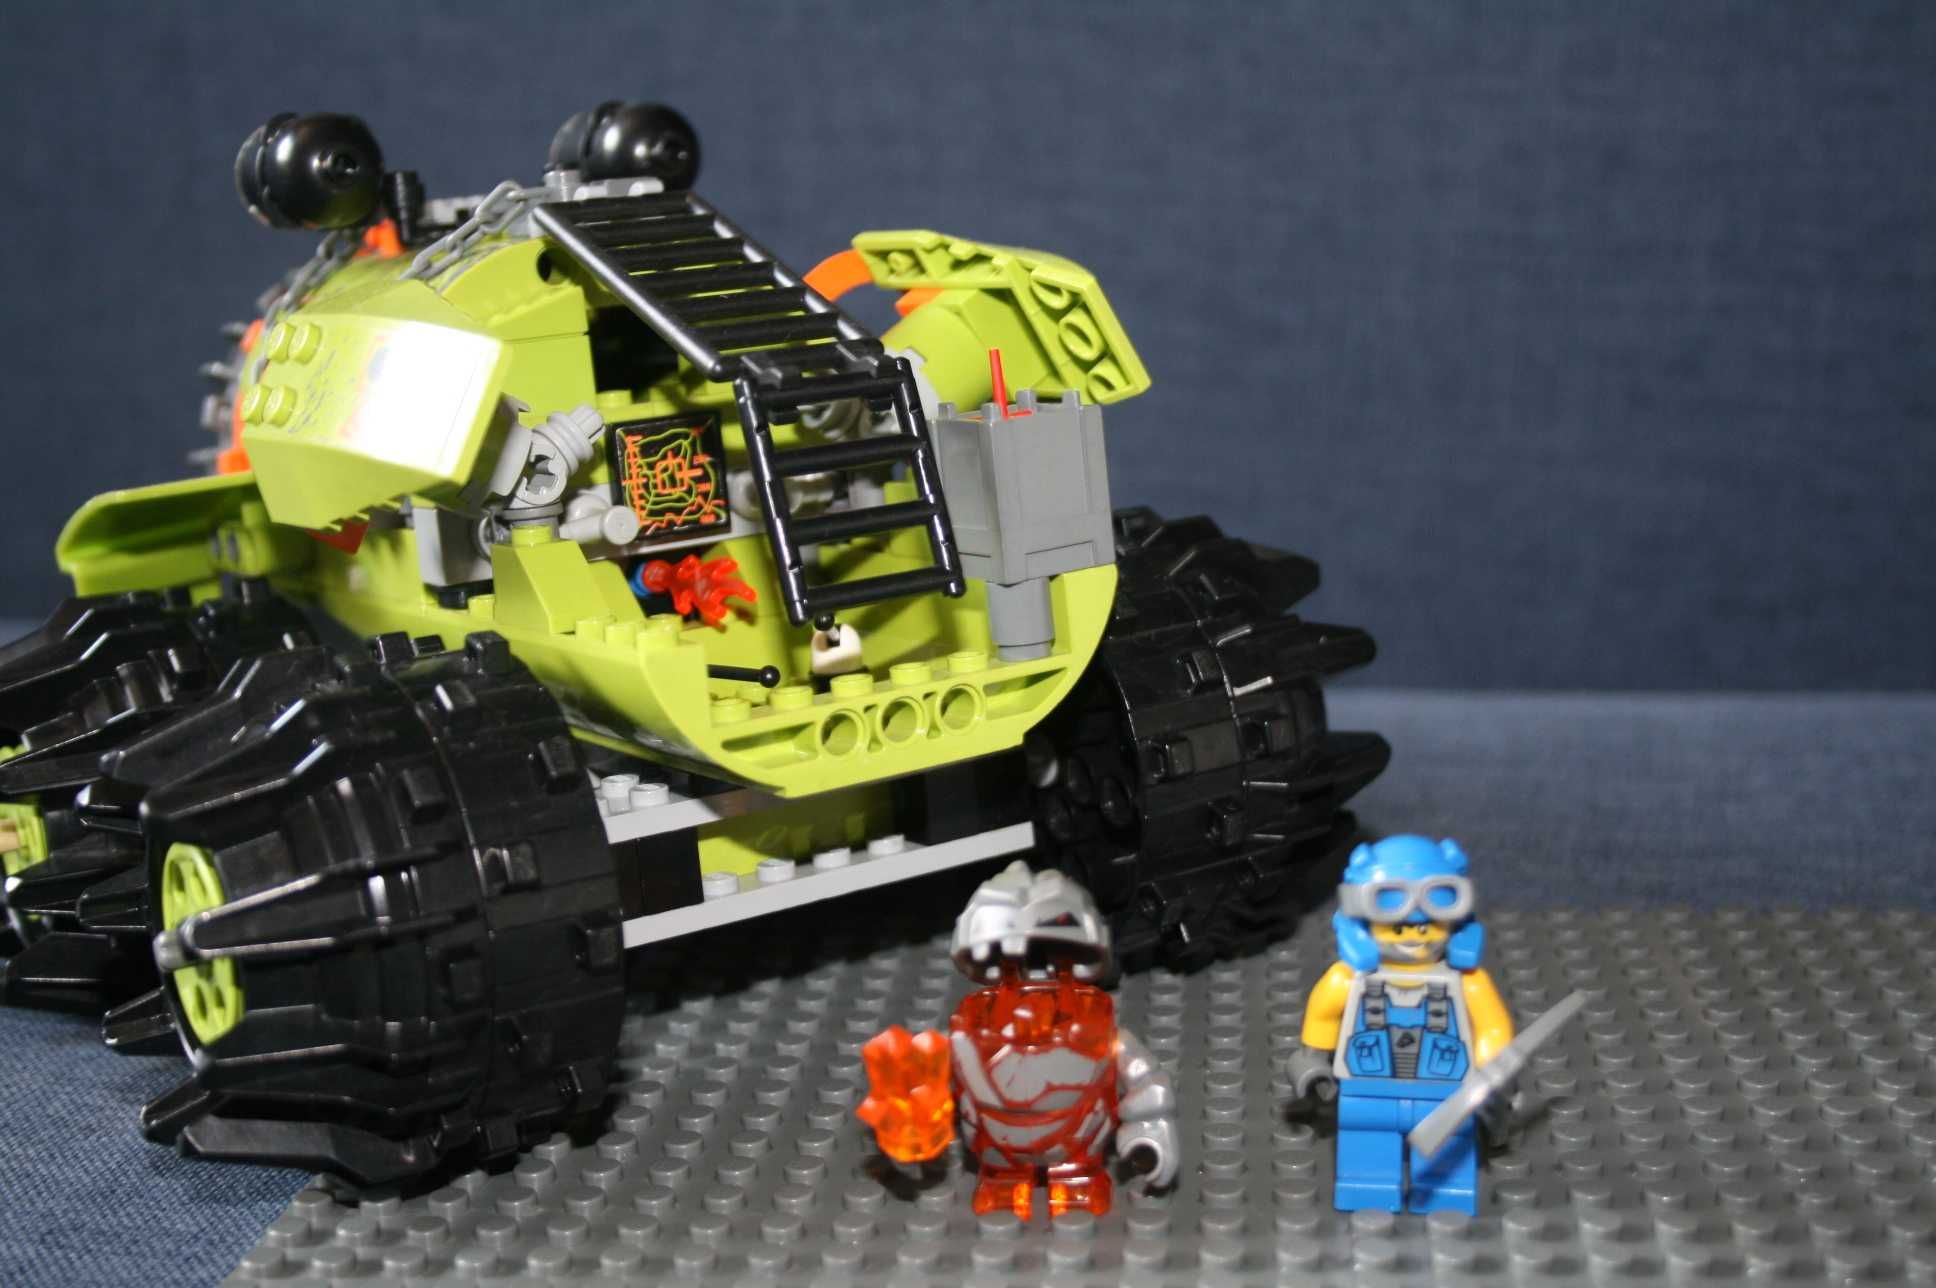 LEGO Power Miners 8960